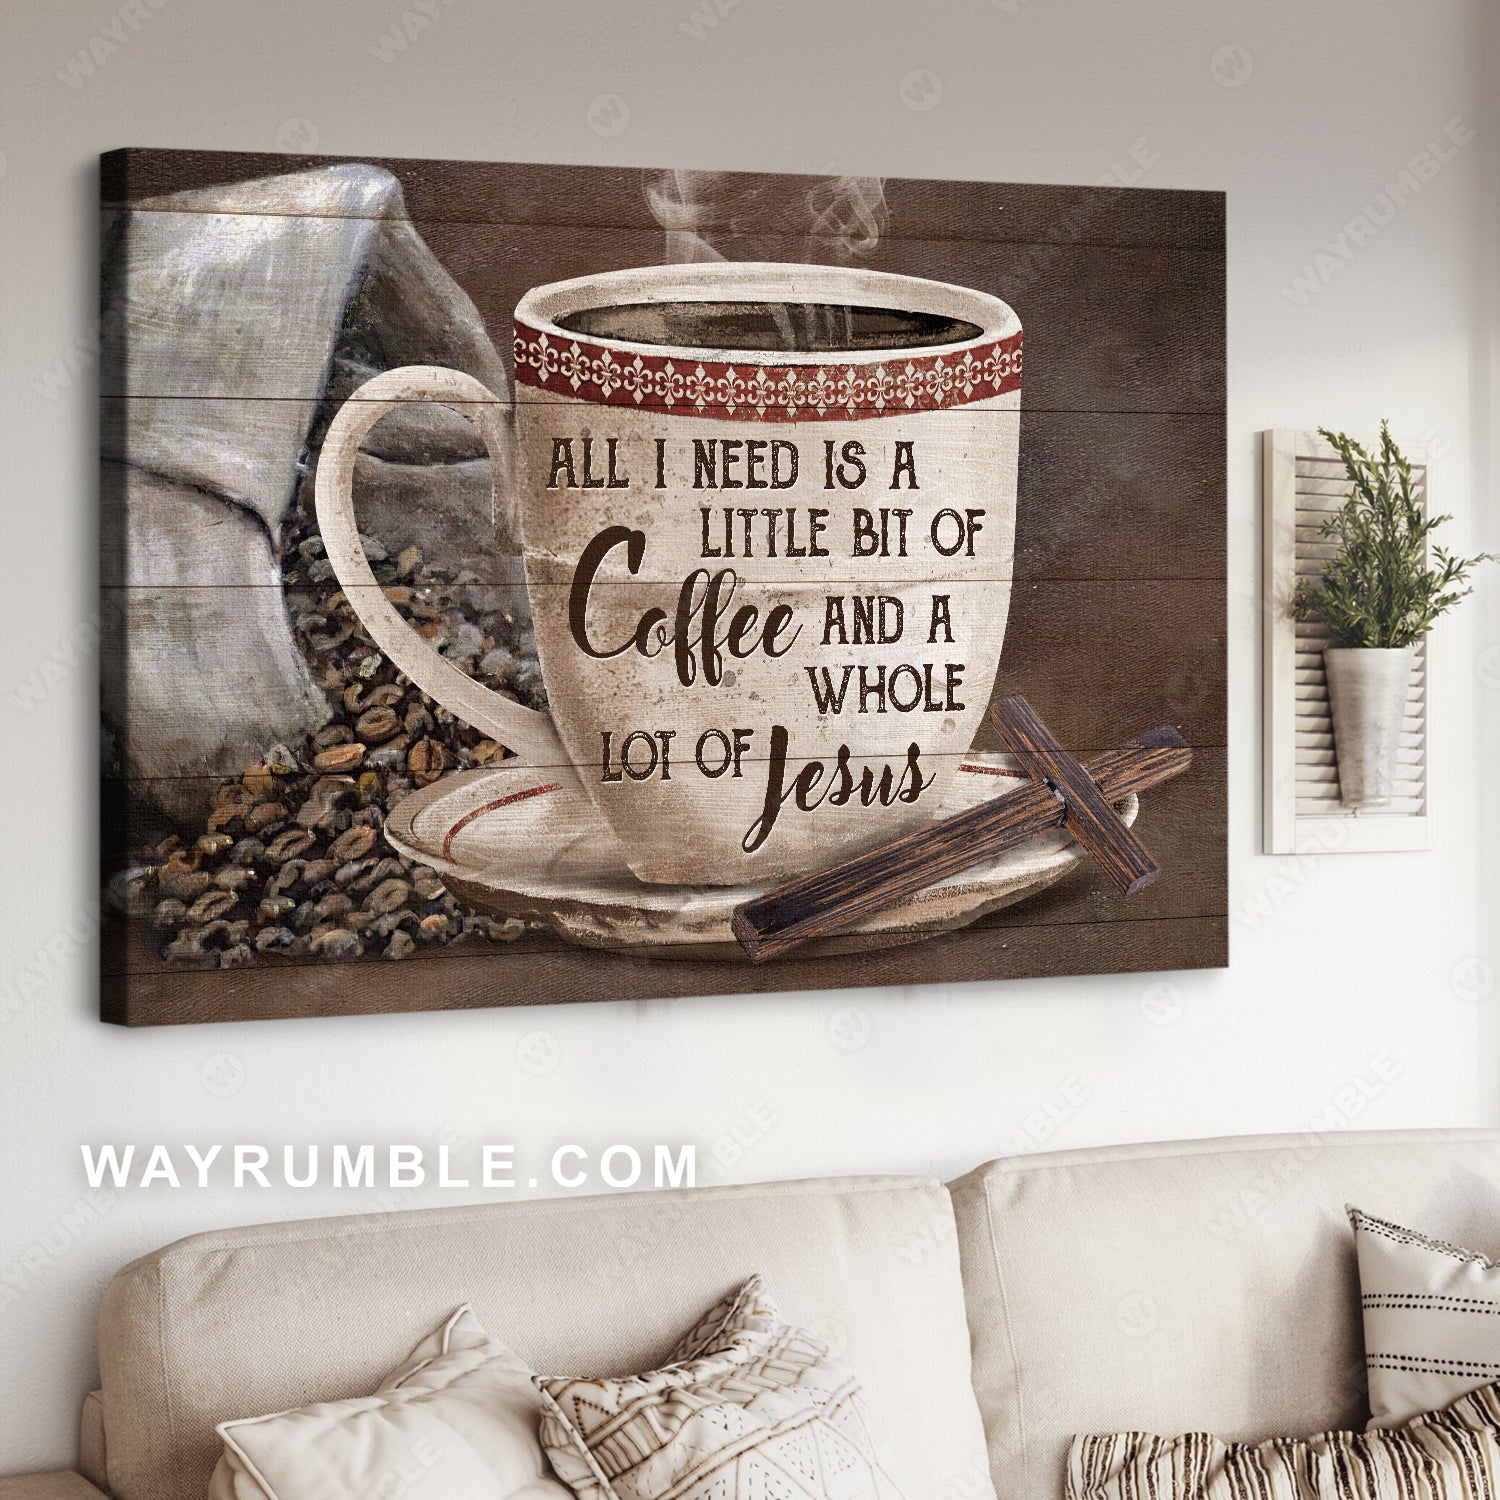 Christ cup, Hot offers cross, - forgiveness Light - Coffee coffee, Jesus Wayrumble